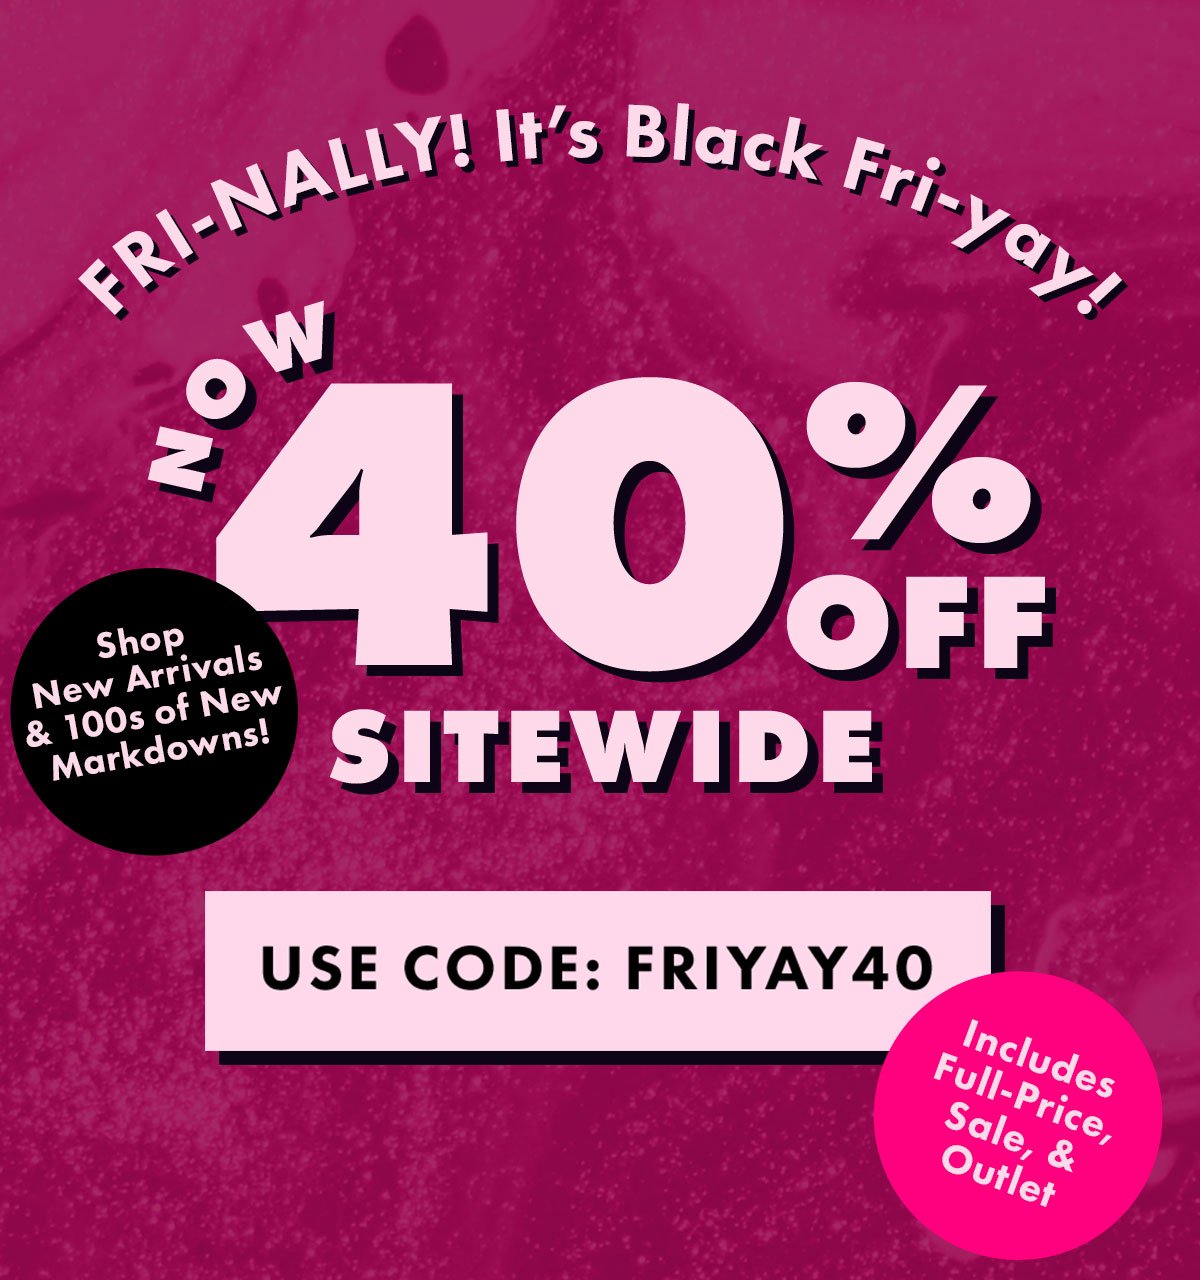 Fri-nally! It's Black Fri-yay!| Now 40% Off Sitewide